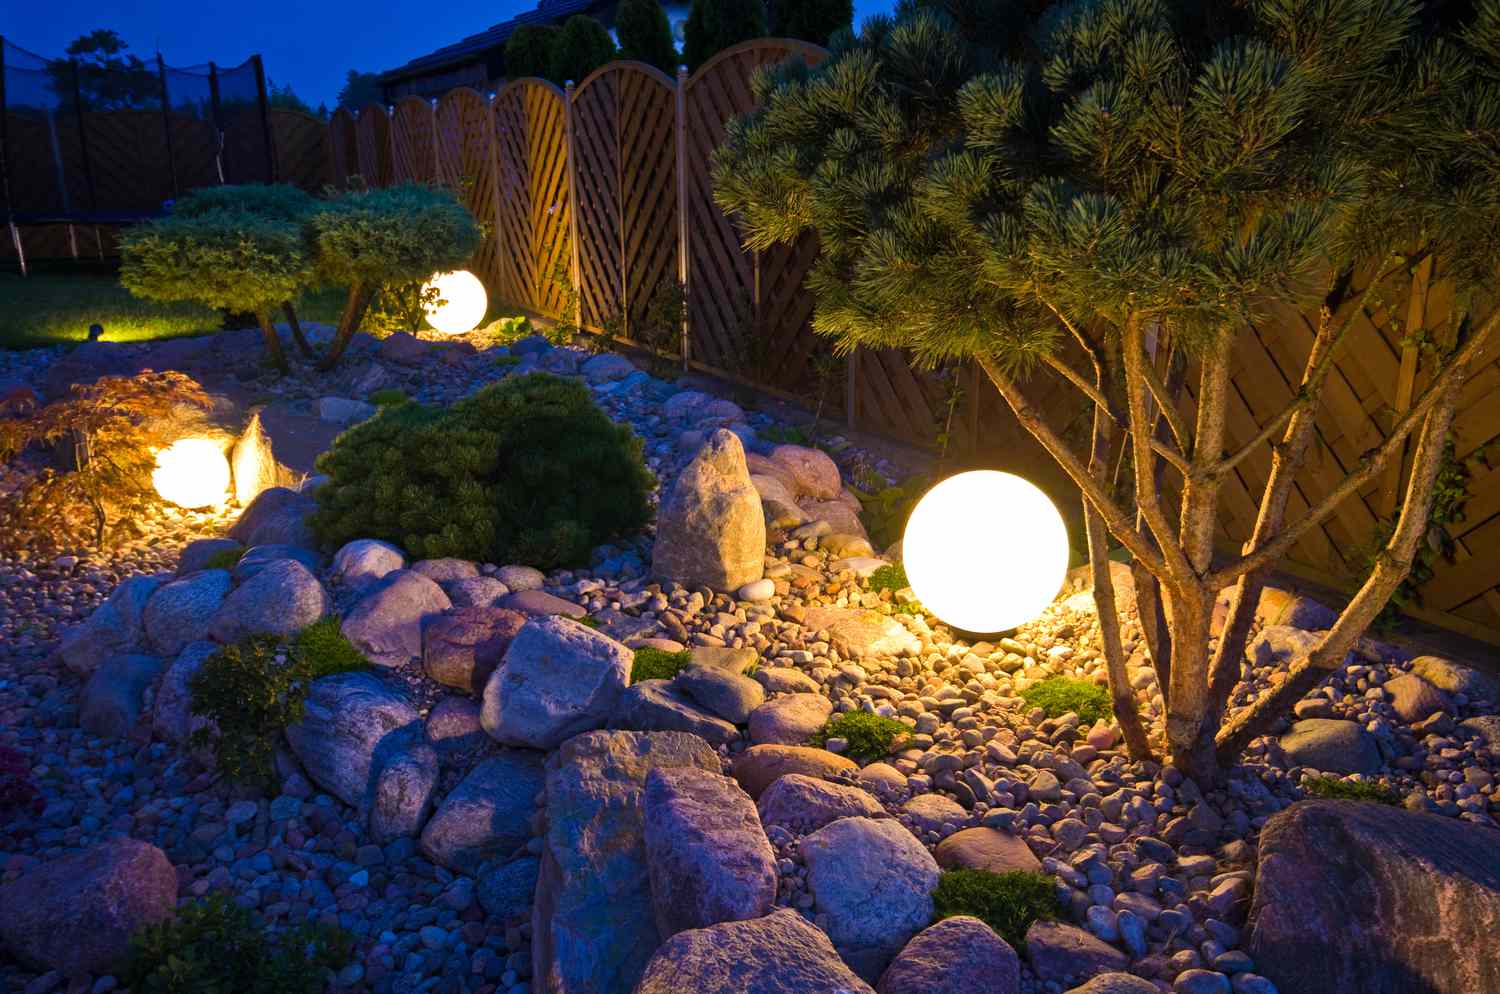 Garden lights in a garden